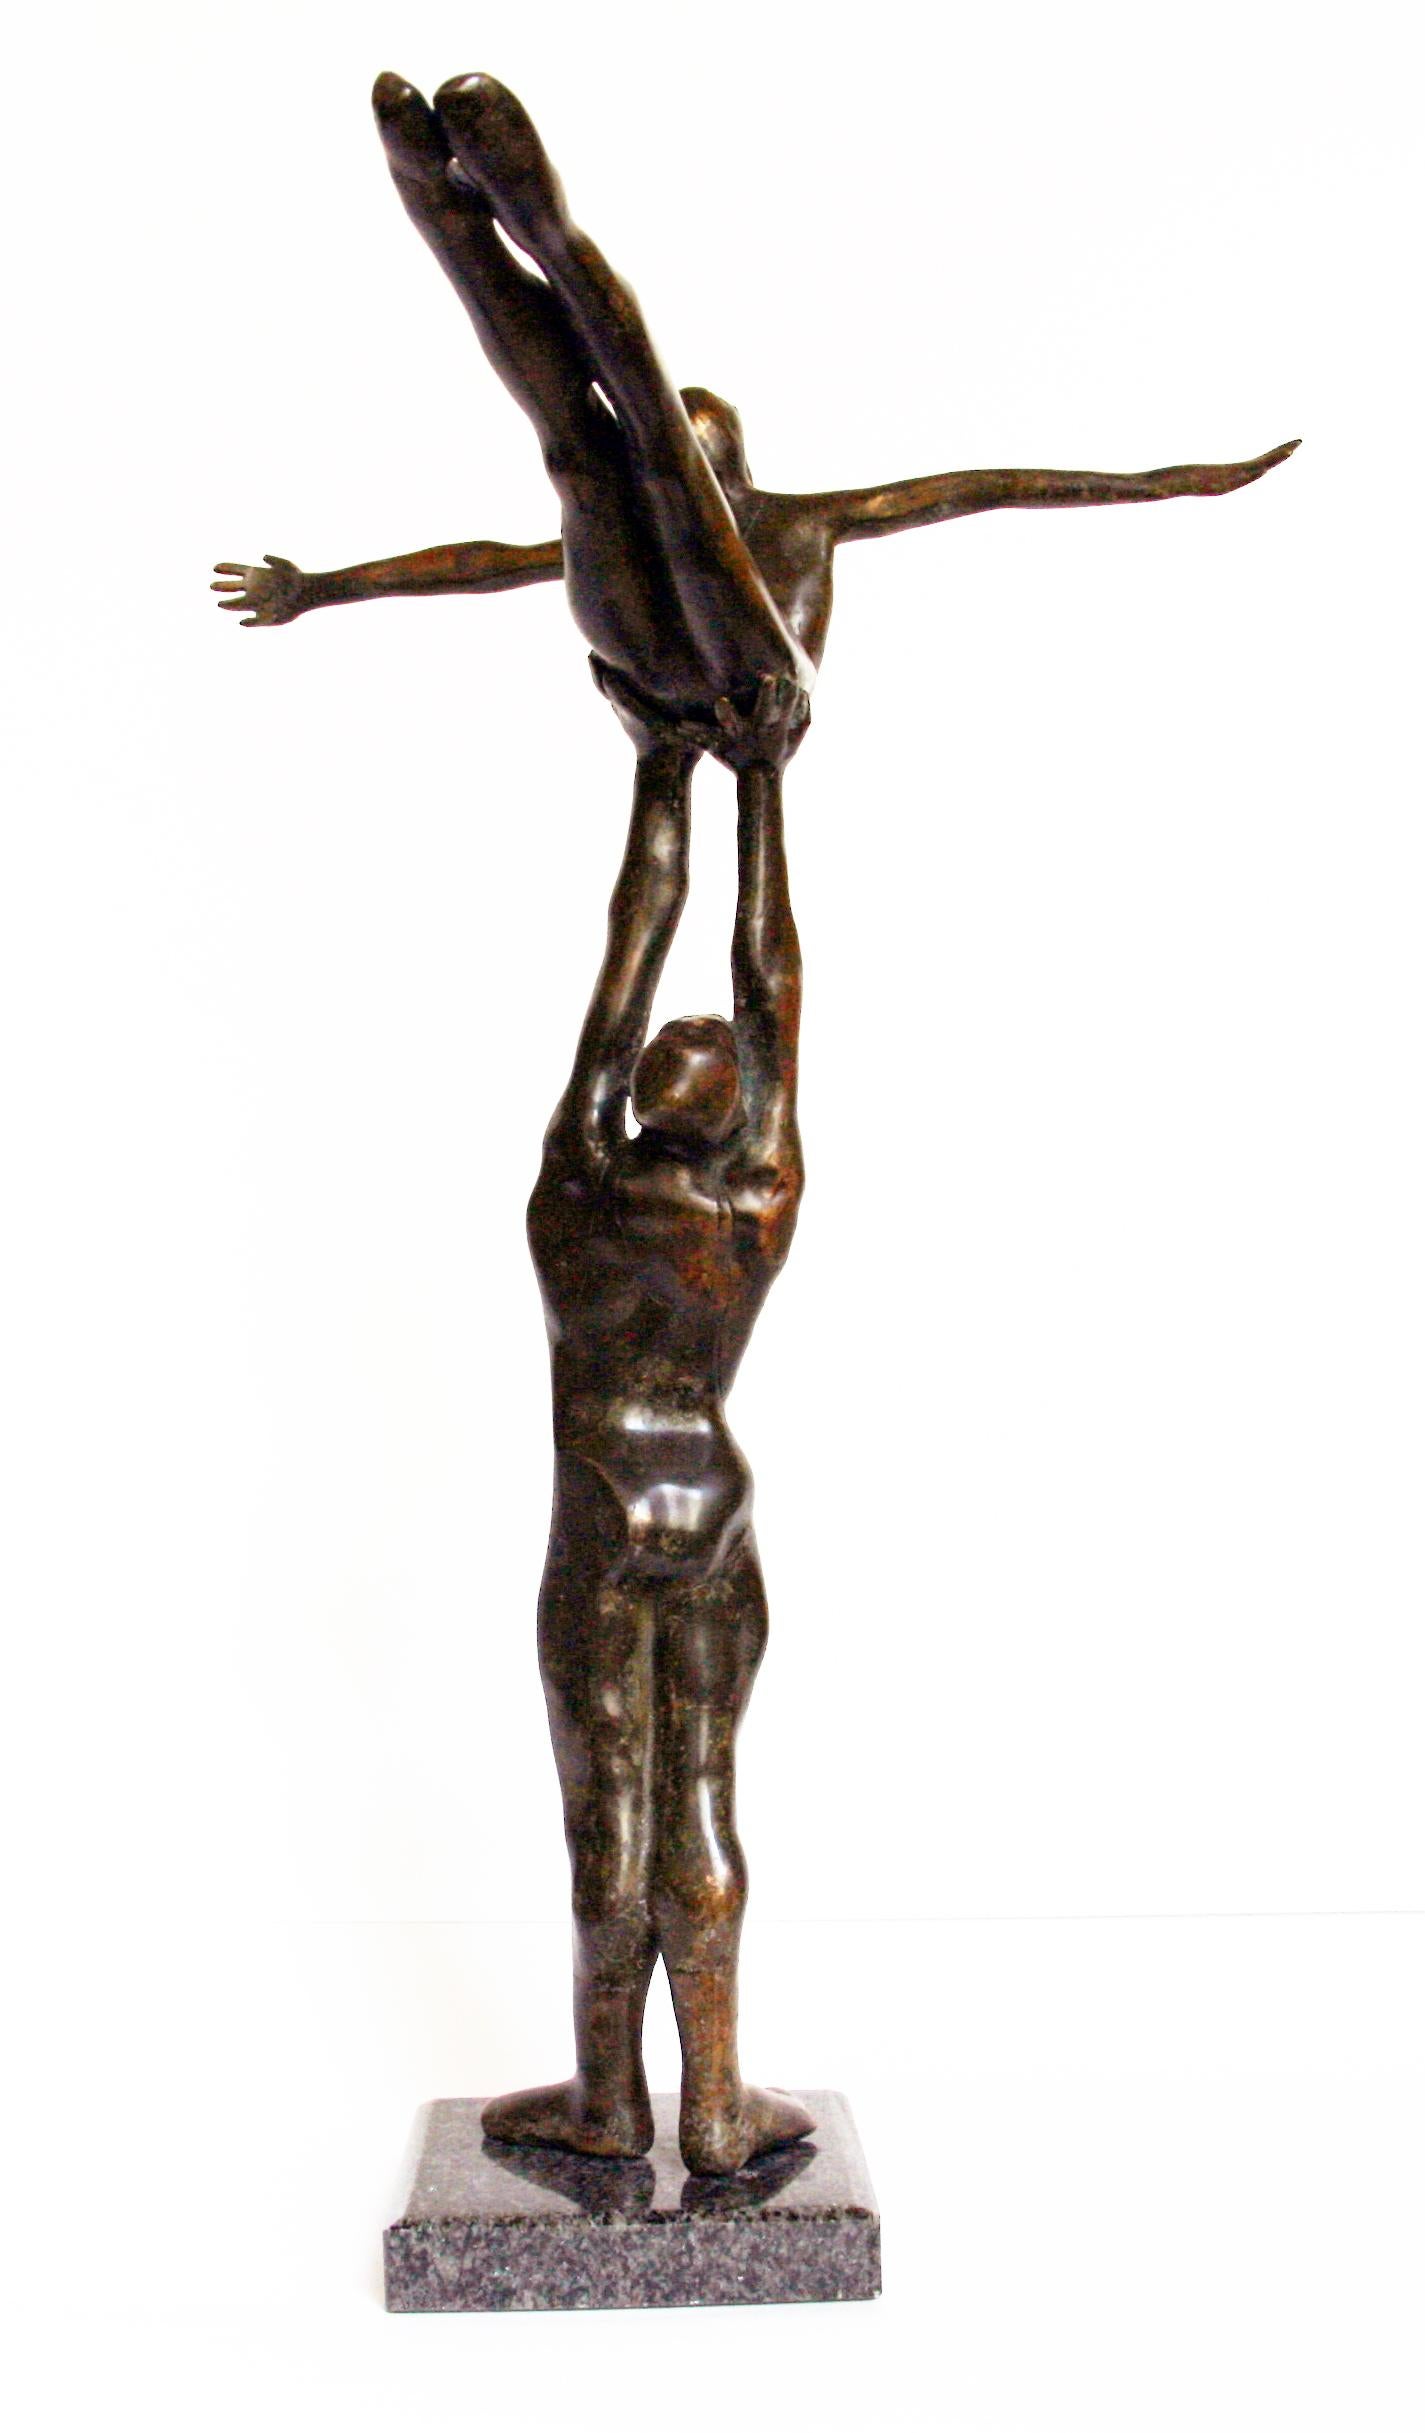 Alvin Ailey - Sculpture by John W. Mills